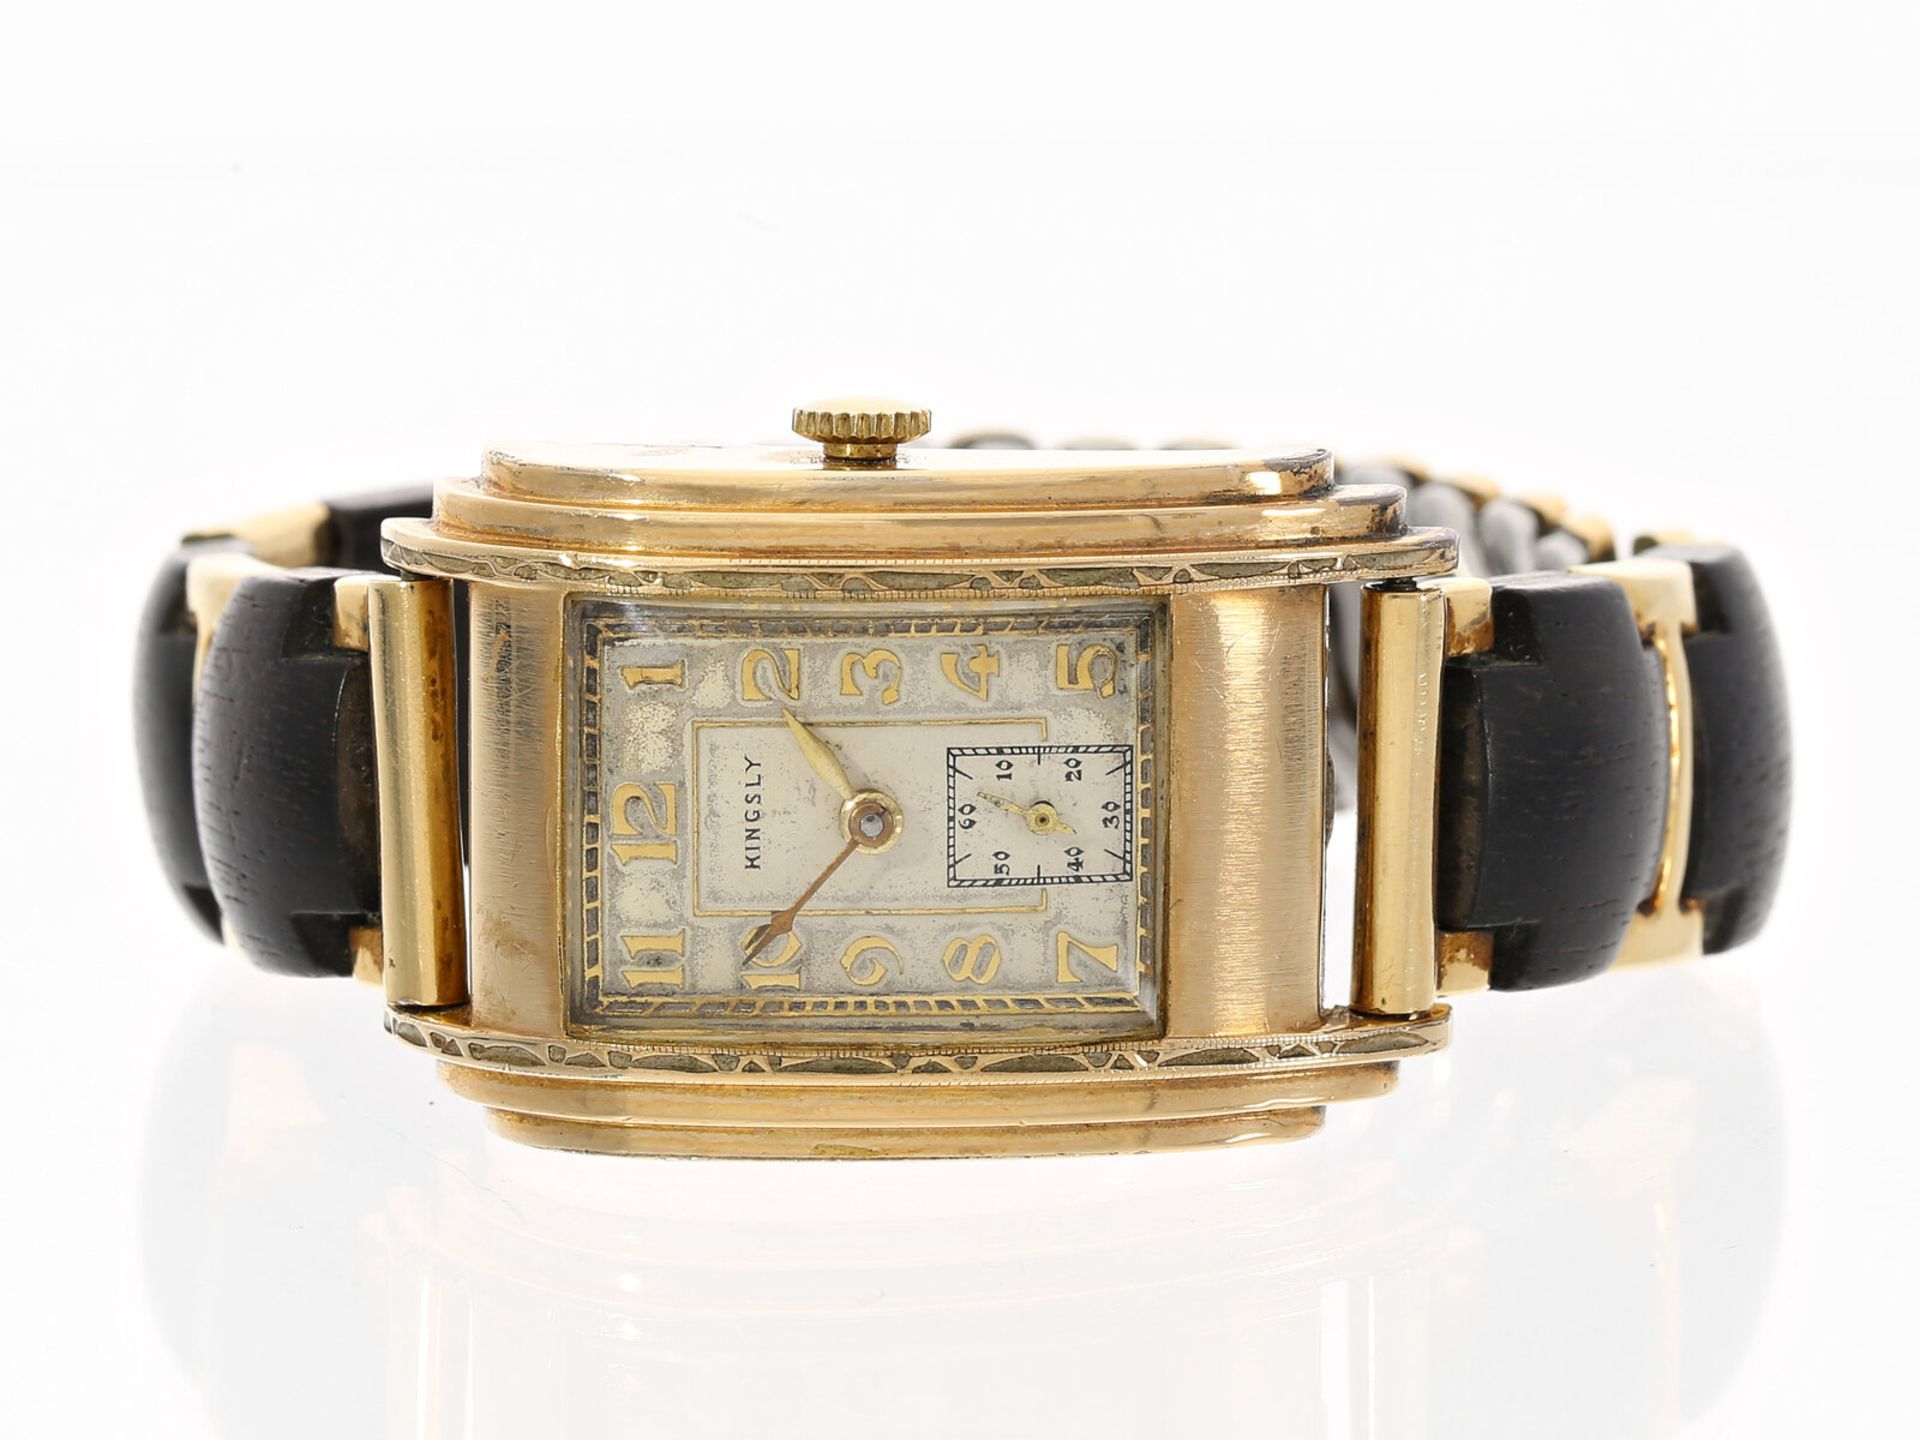 Seltene, vergoldete Art déco Armbanduhr der Marke "Kinsley", sog. "Driver's Watch